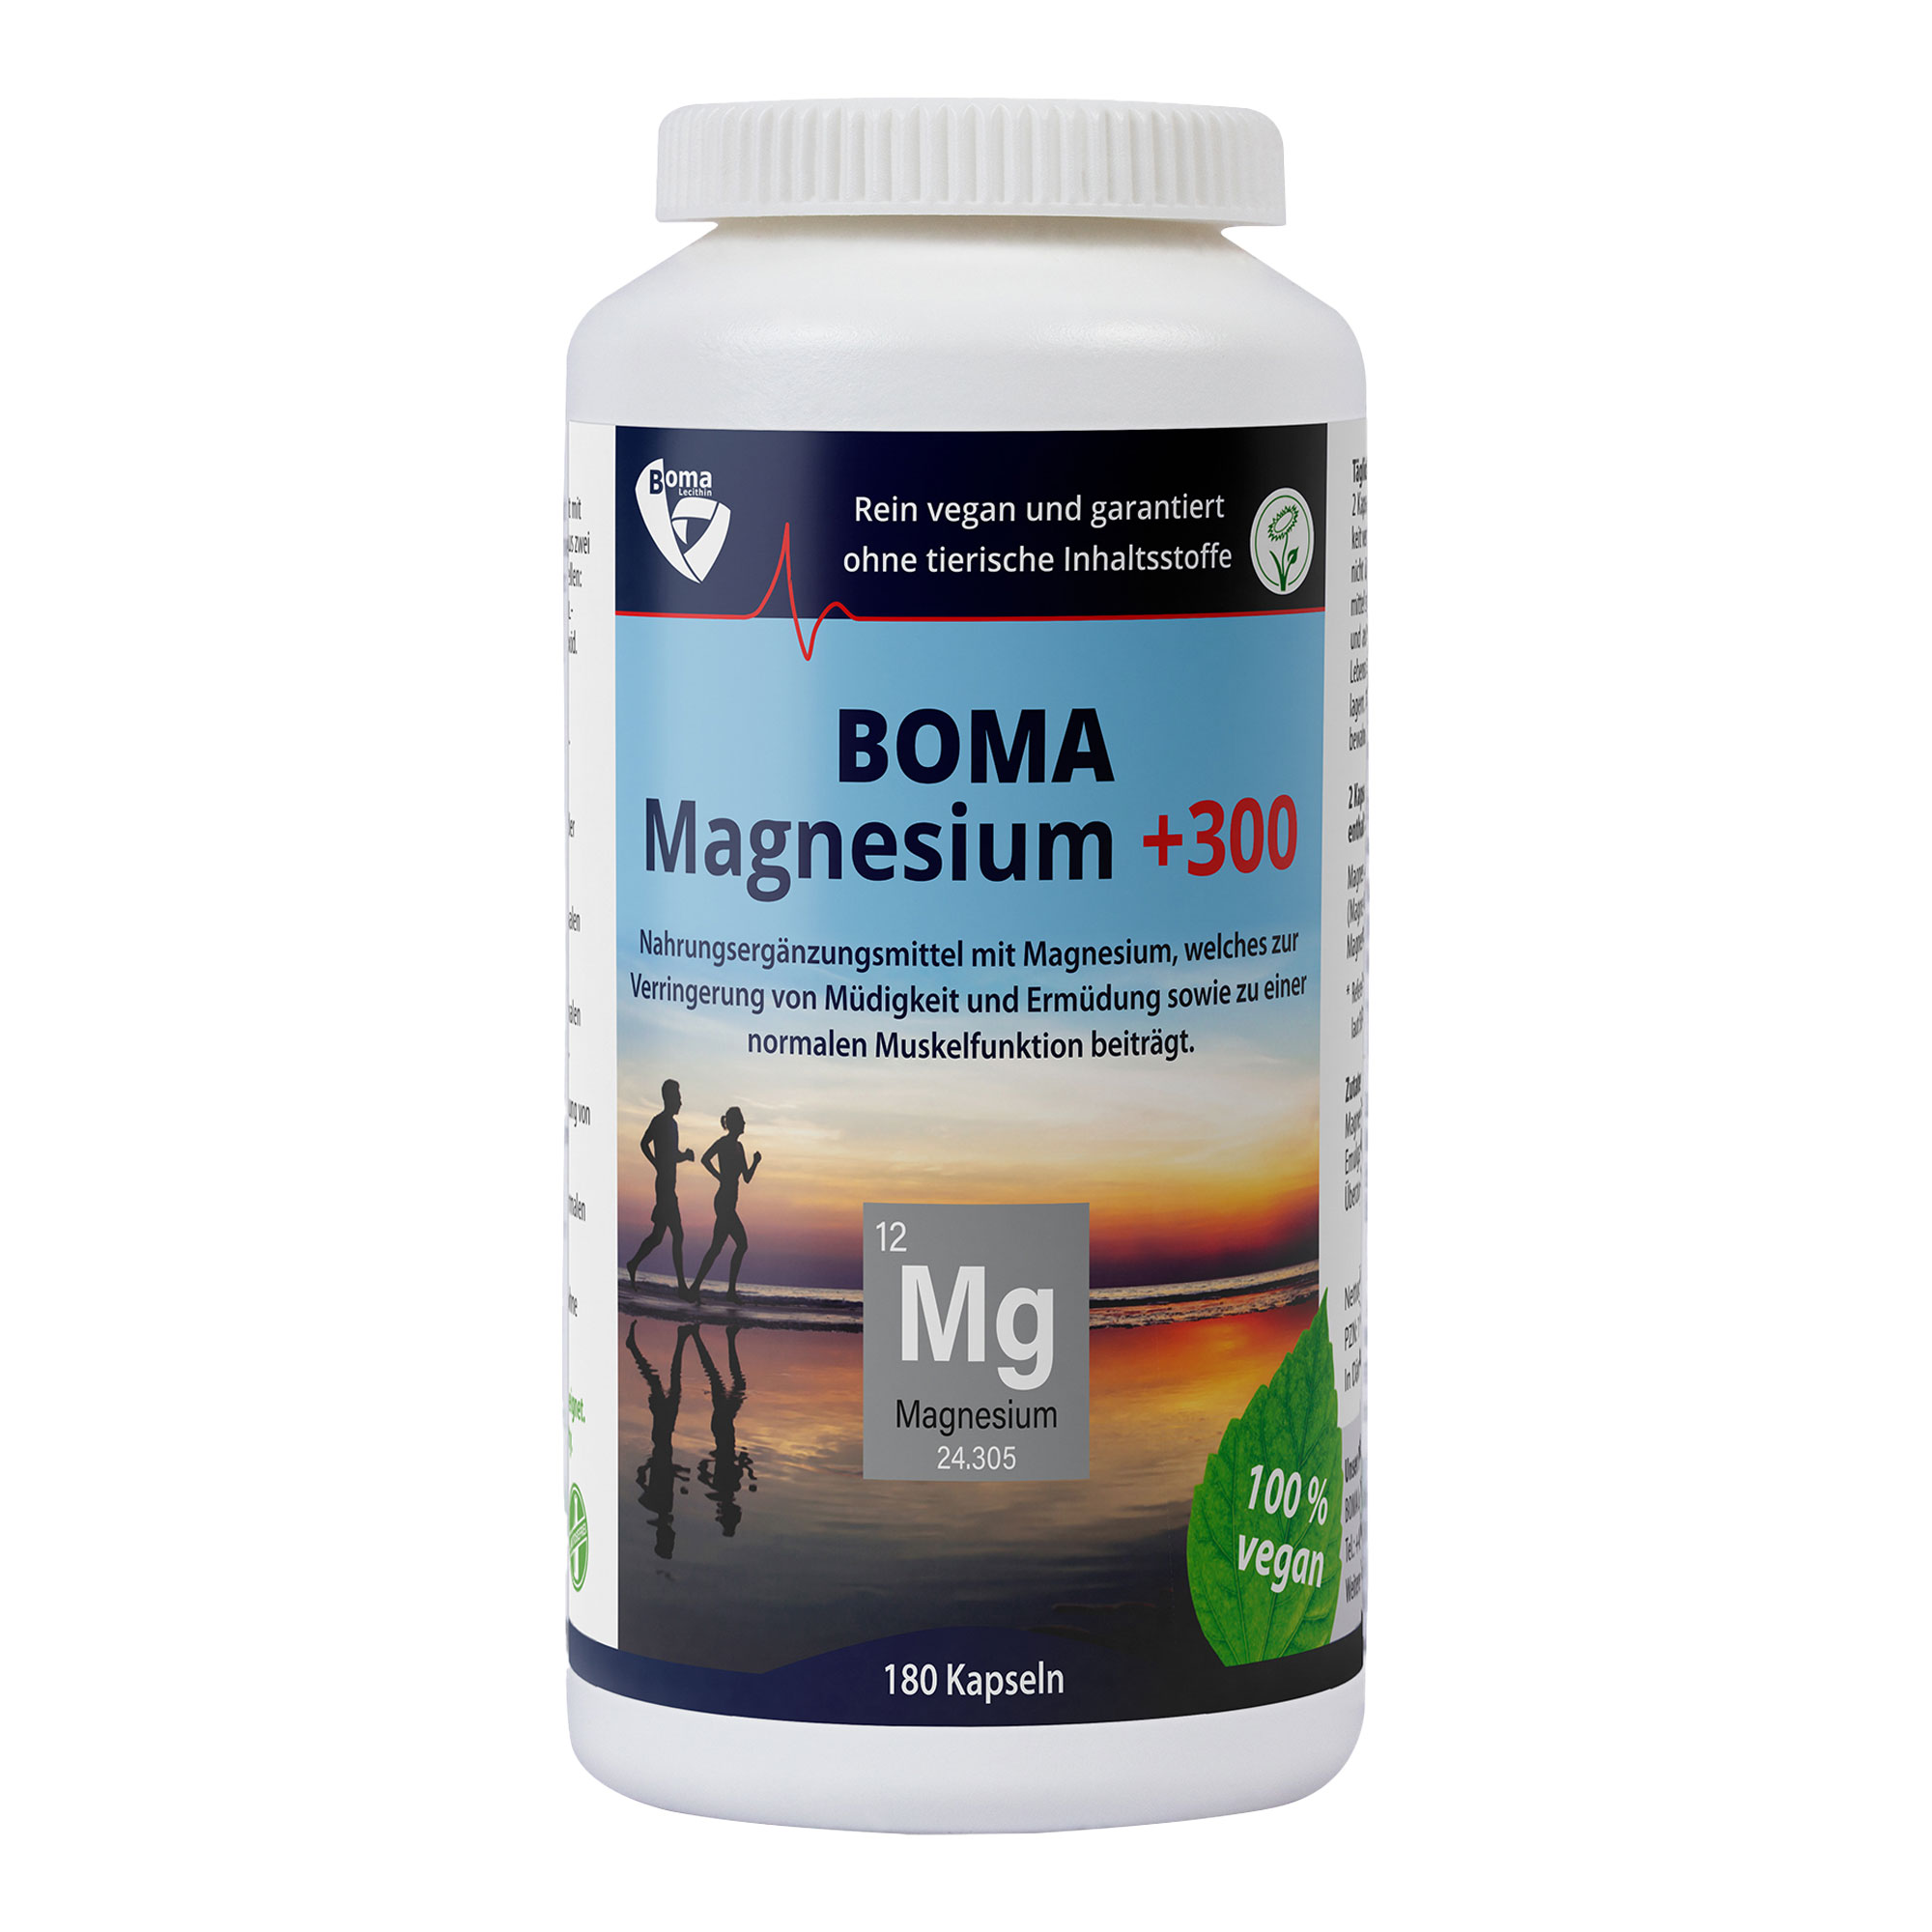 Nahrungsergänzungsmittel mit 300 mg Magnesium pro Kapsel.